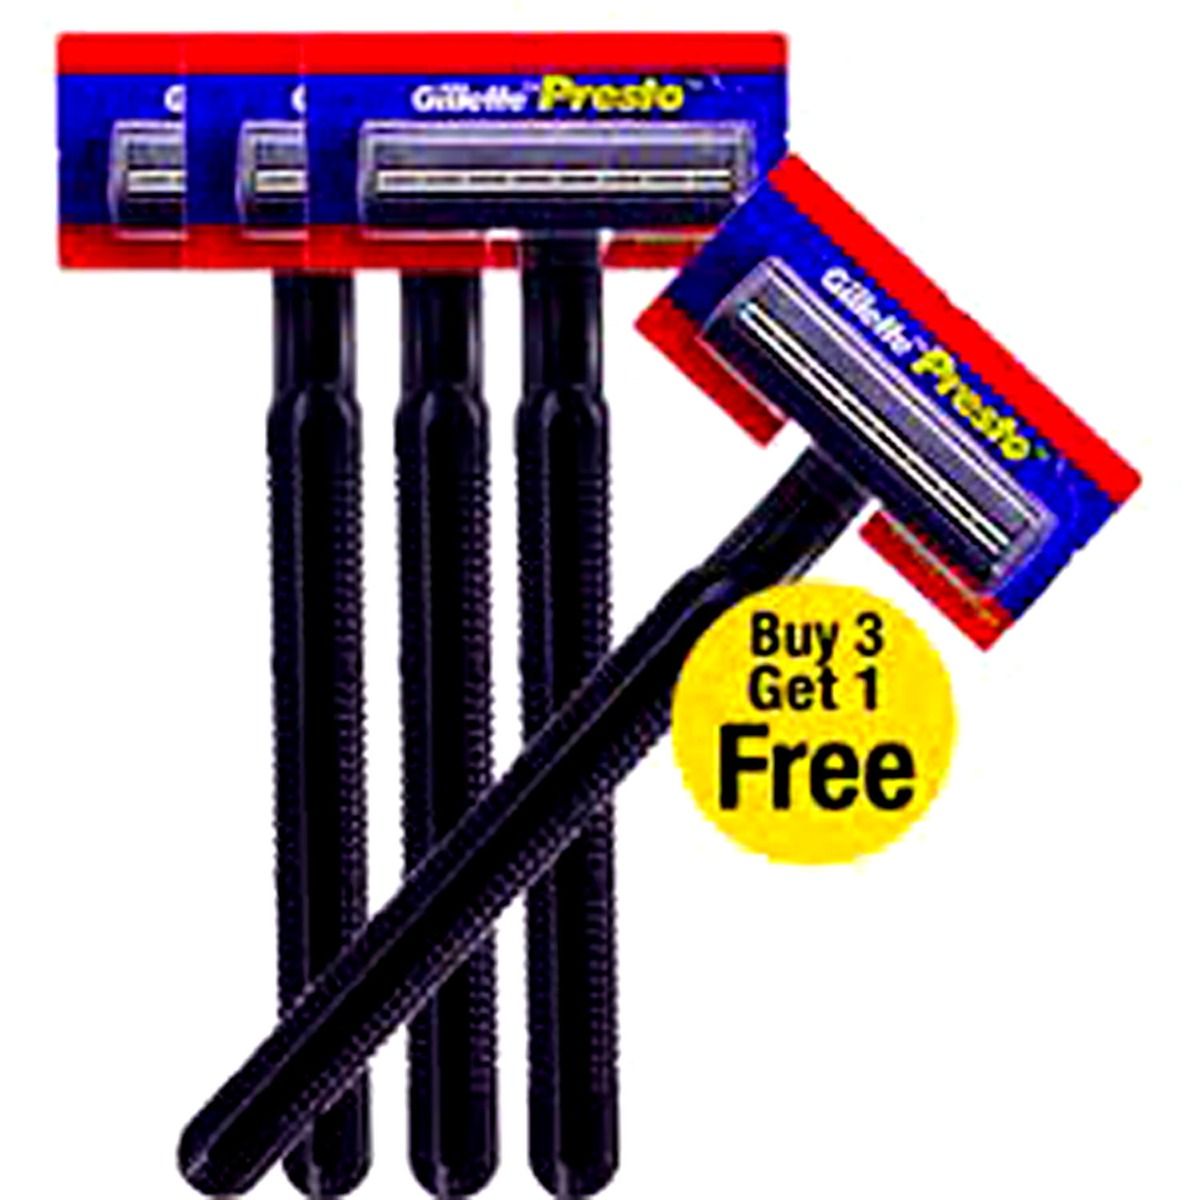 Buy Gillet Presto Disposable Razor 4's (Buy 3 Get 1 Free) Online